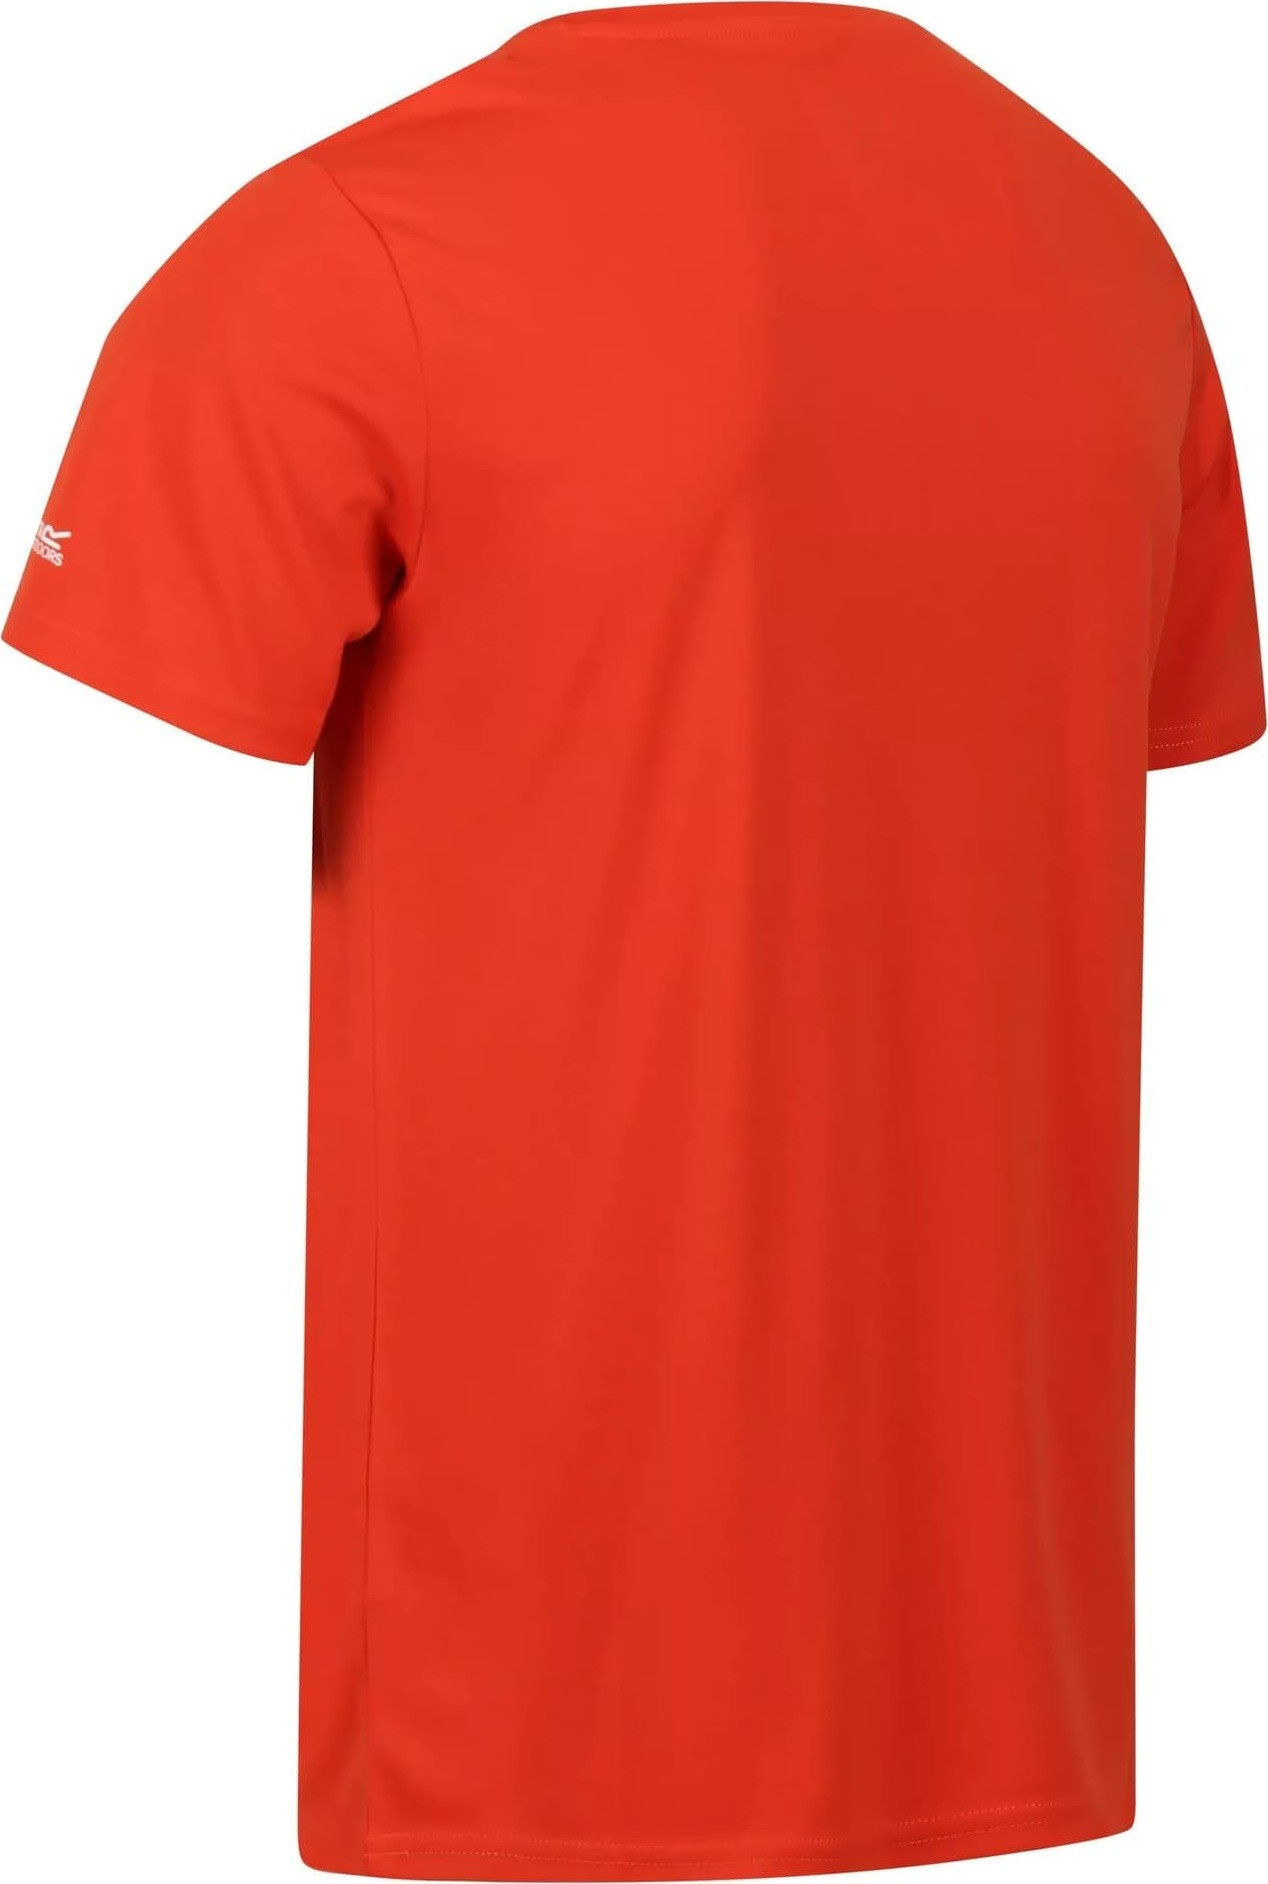 Pánské tričko Regatta Fingal VII RMT272-33L oranžové Oranžová XXL